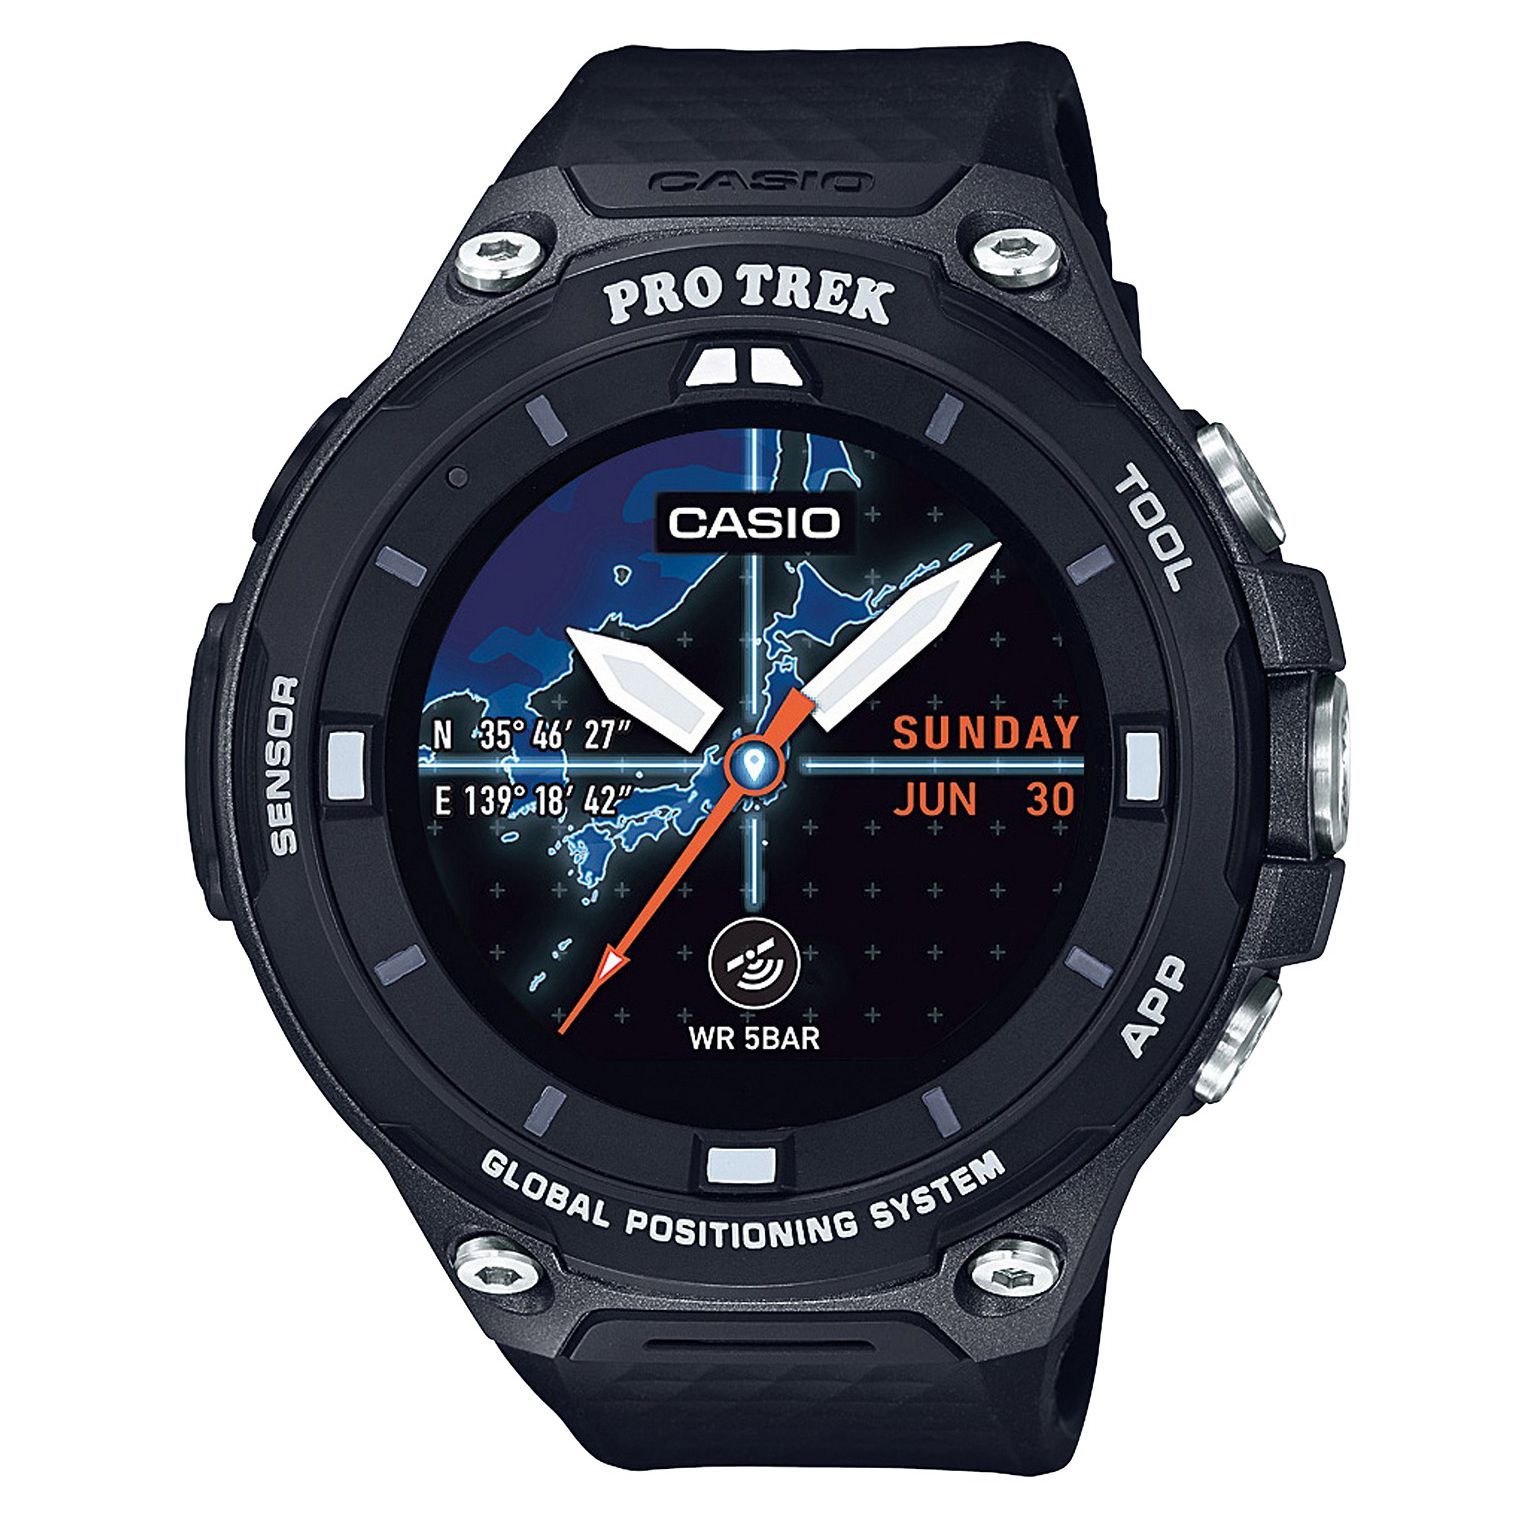 Casio WSD-F20 Protrek Android Wear Smartwatch